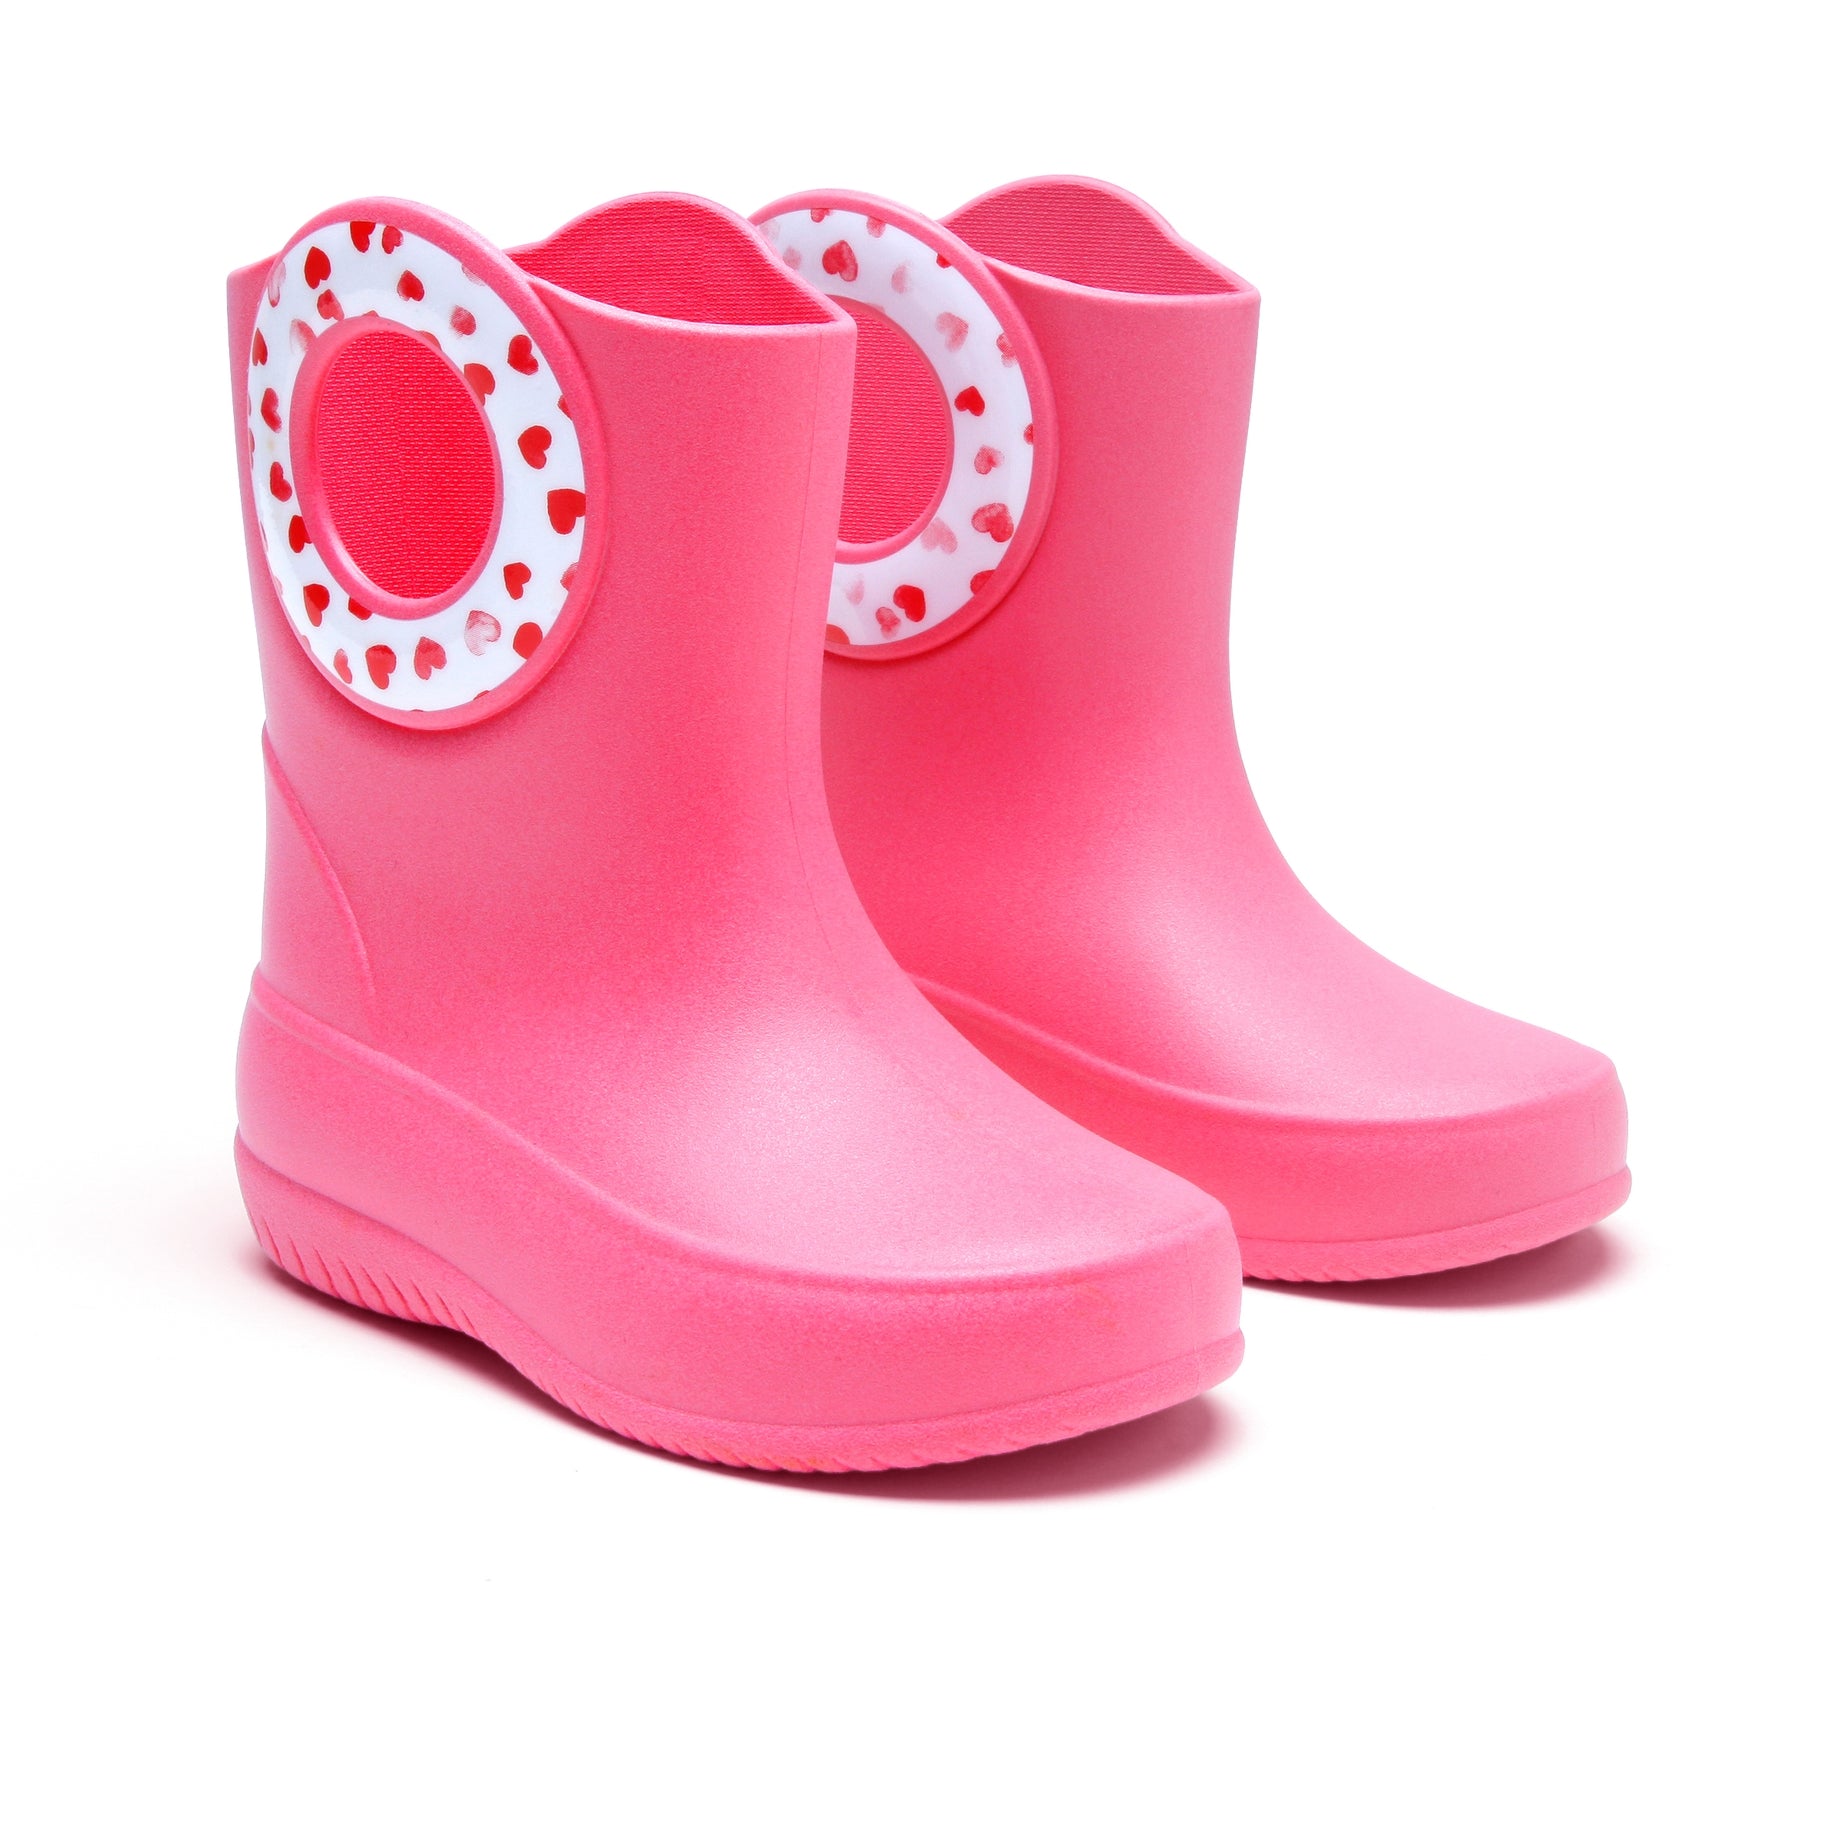 Toddler Rain Boot - Pink Hearts